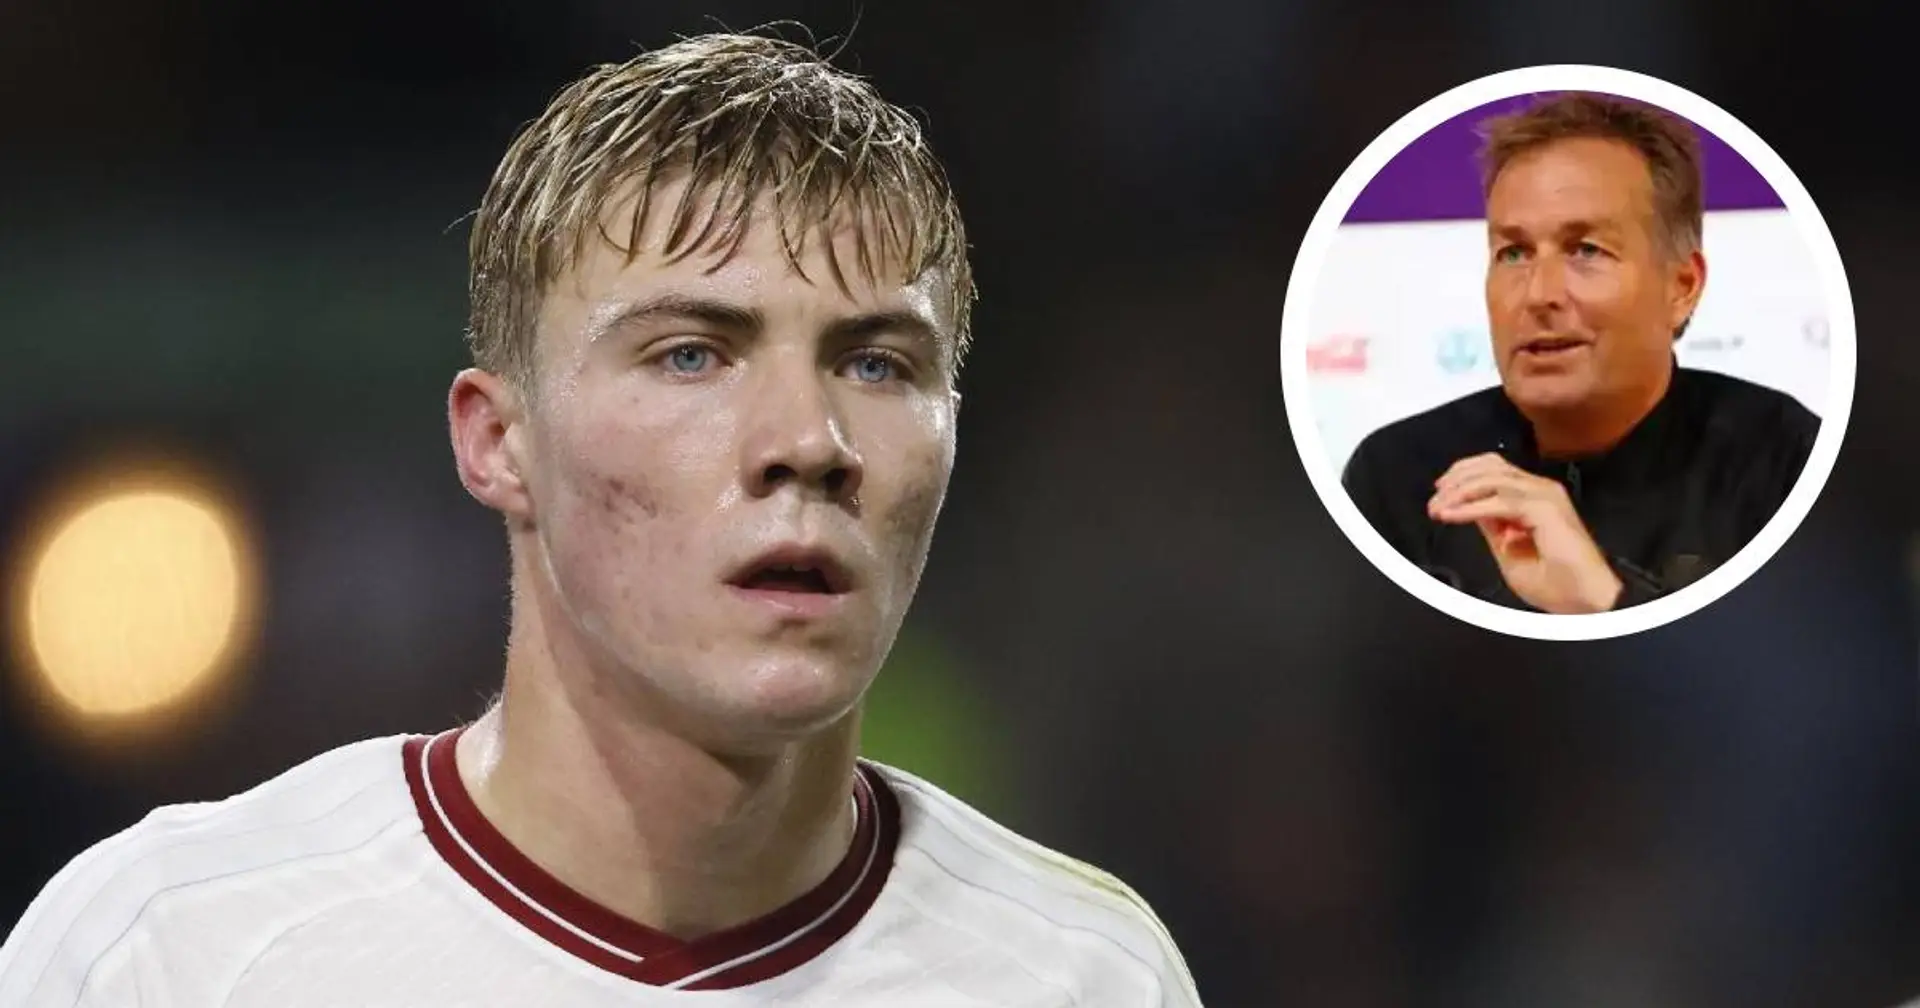 Man United have 'agreement' with Denmark to avoid Rasmus Hojlund injury